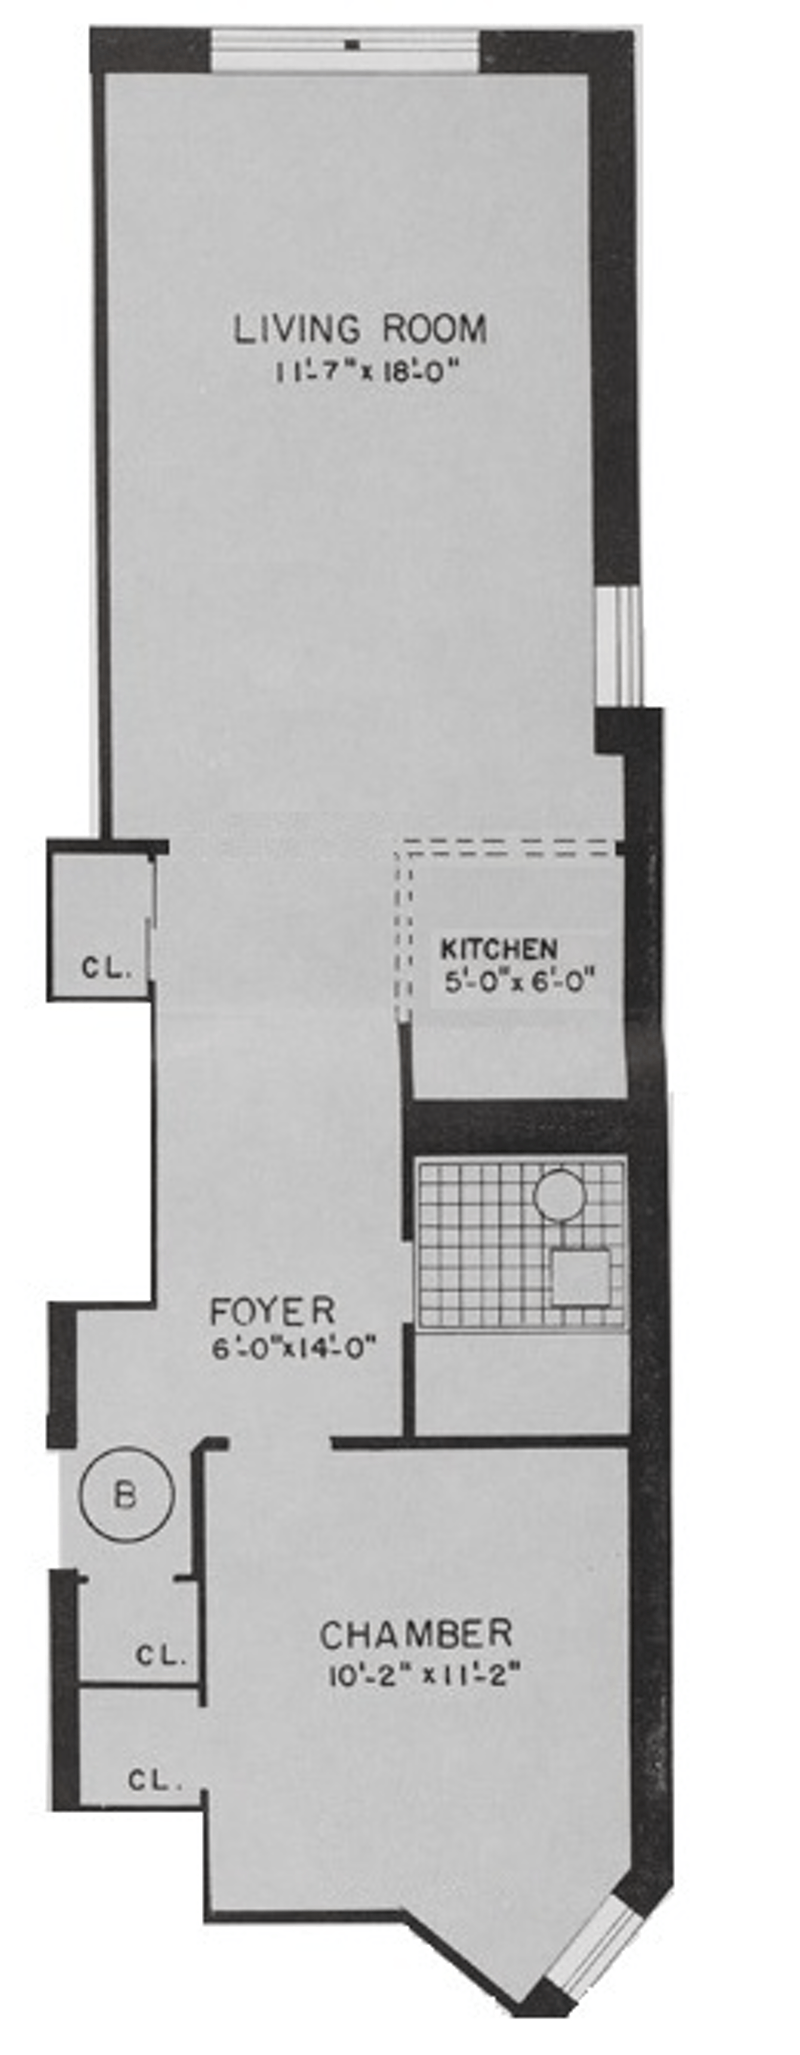 Floorplan for 534 East 88th Street, 5B